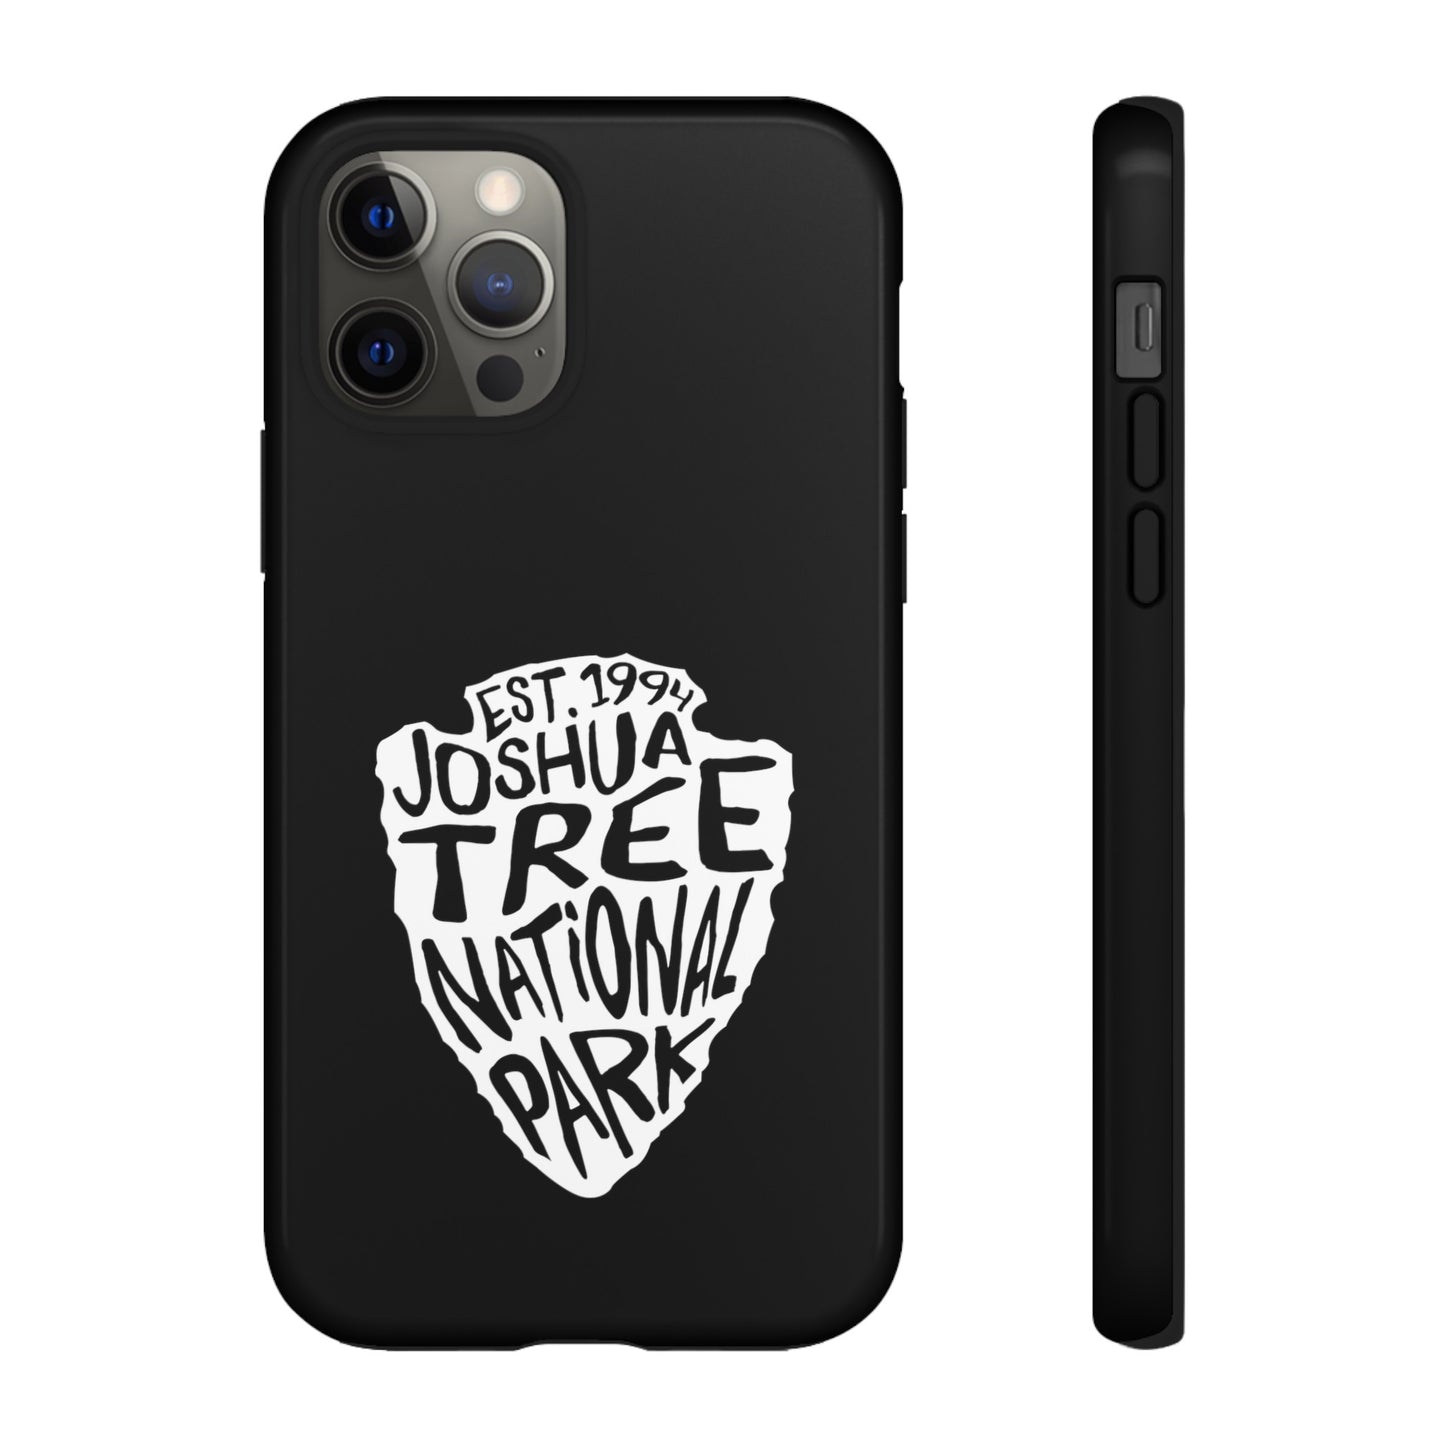 Joshua Tree National Park Phone Case - Arrowhead Design